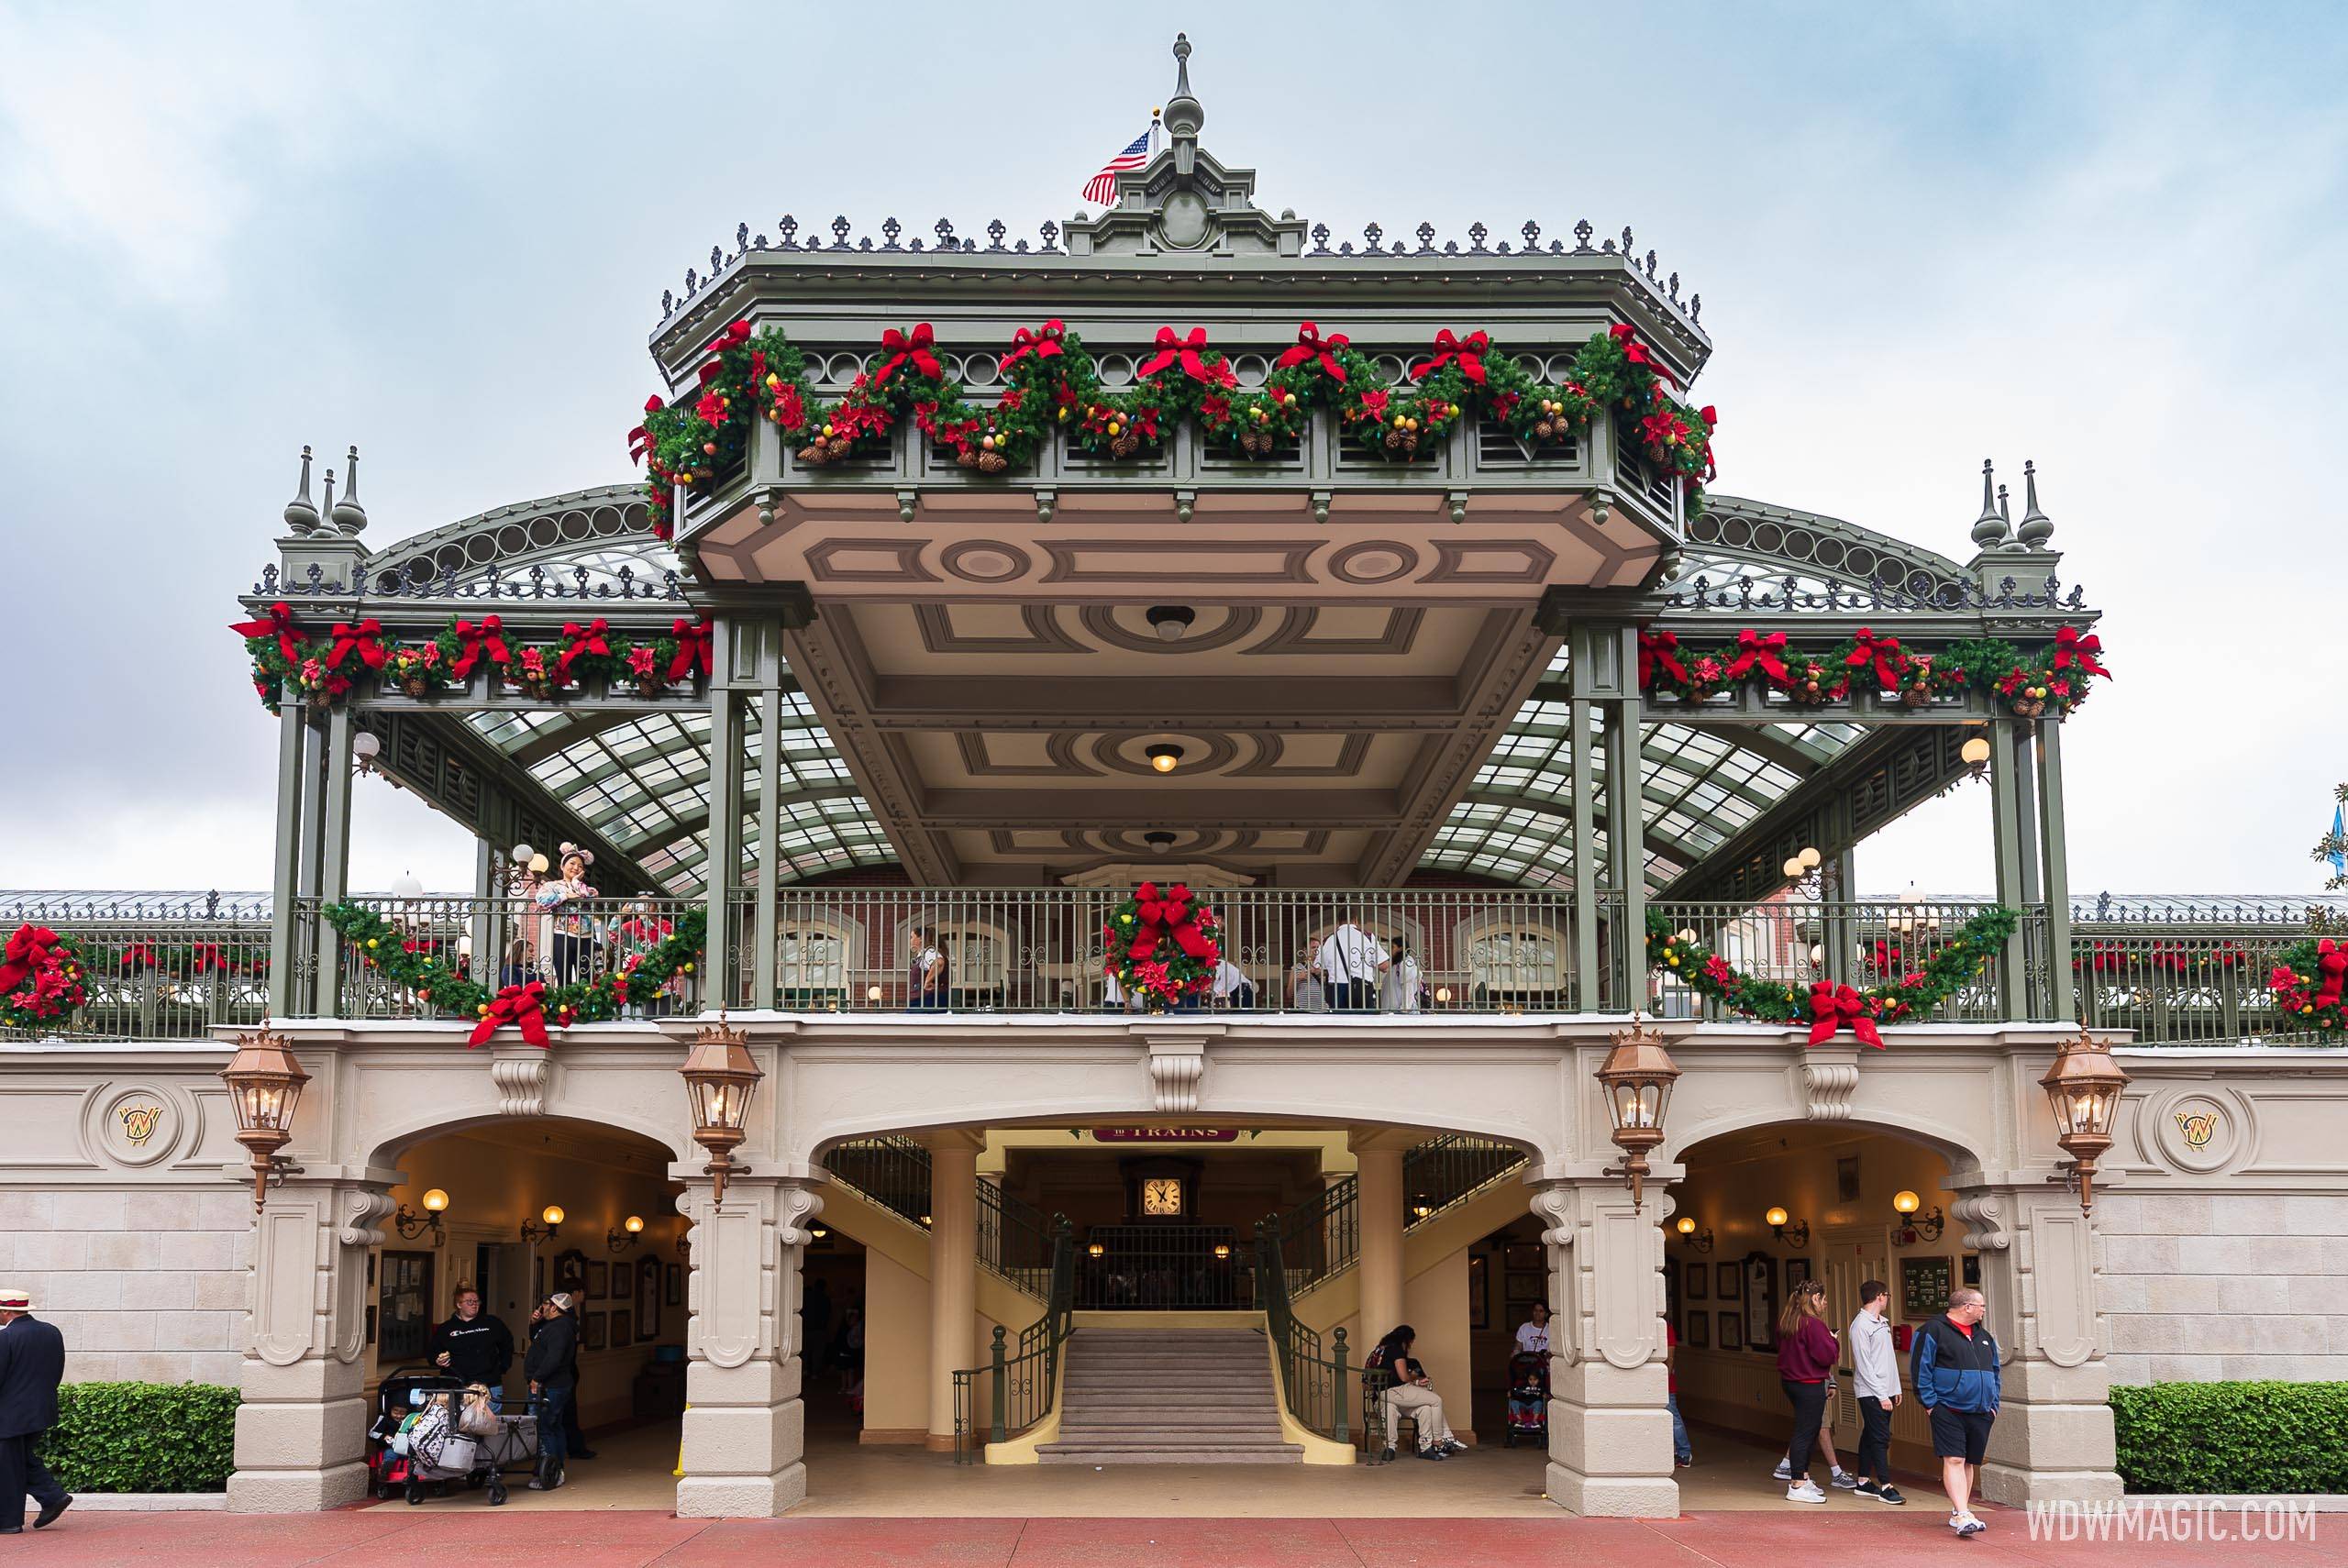 Disney: Last call for Magic Kingdom train rides — for a while – Orlando  Sentinel